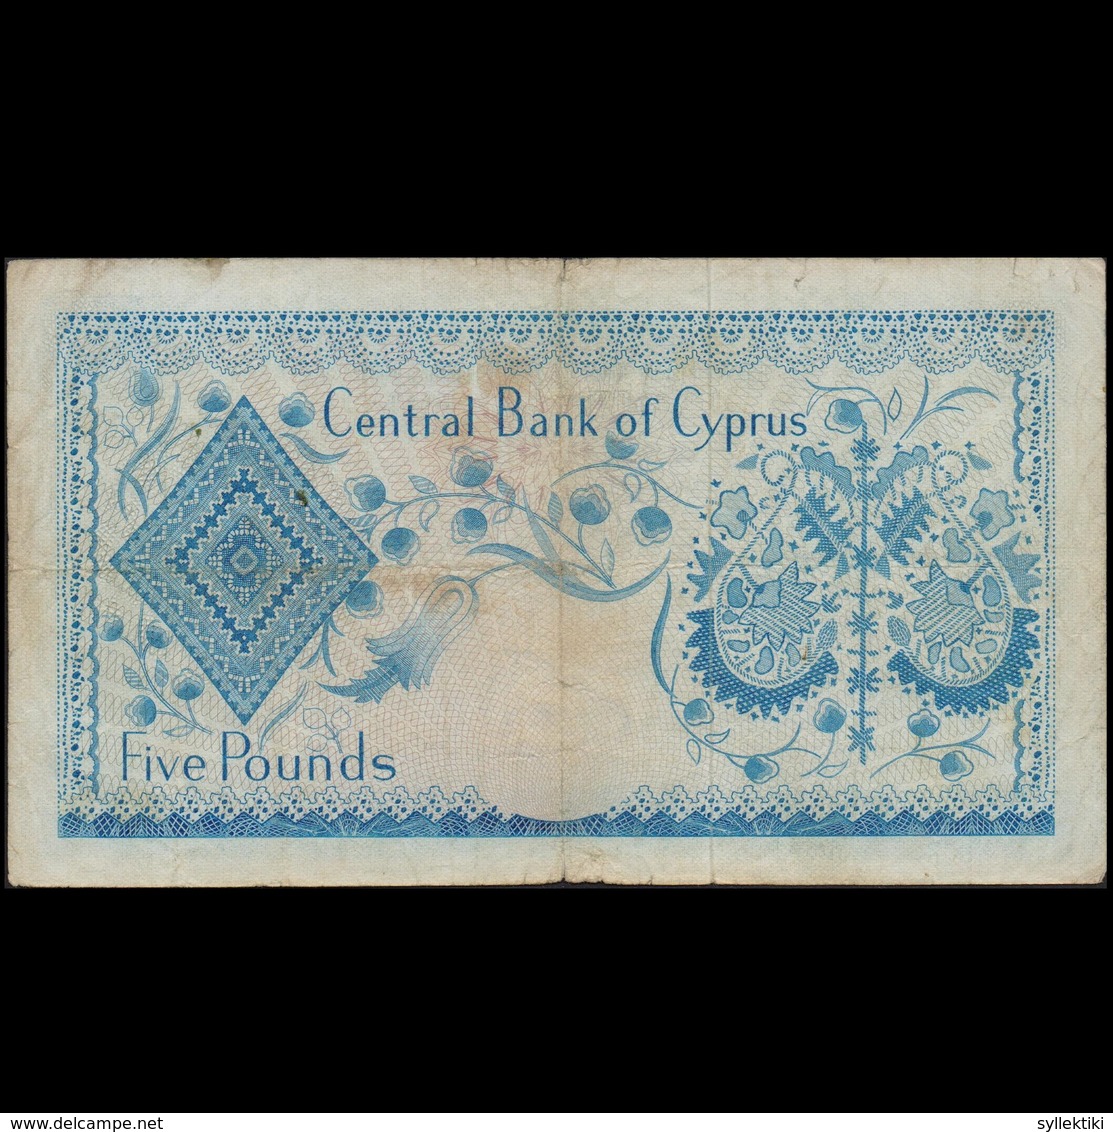 CYPRUS 1969 FIVE POUNDS BANKNOTE F+ - Chypre